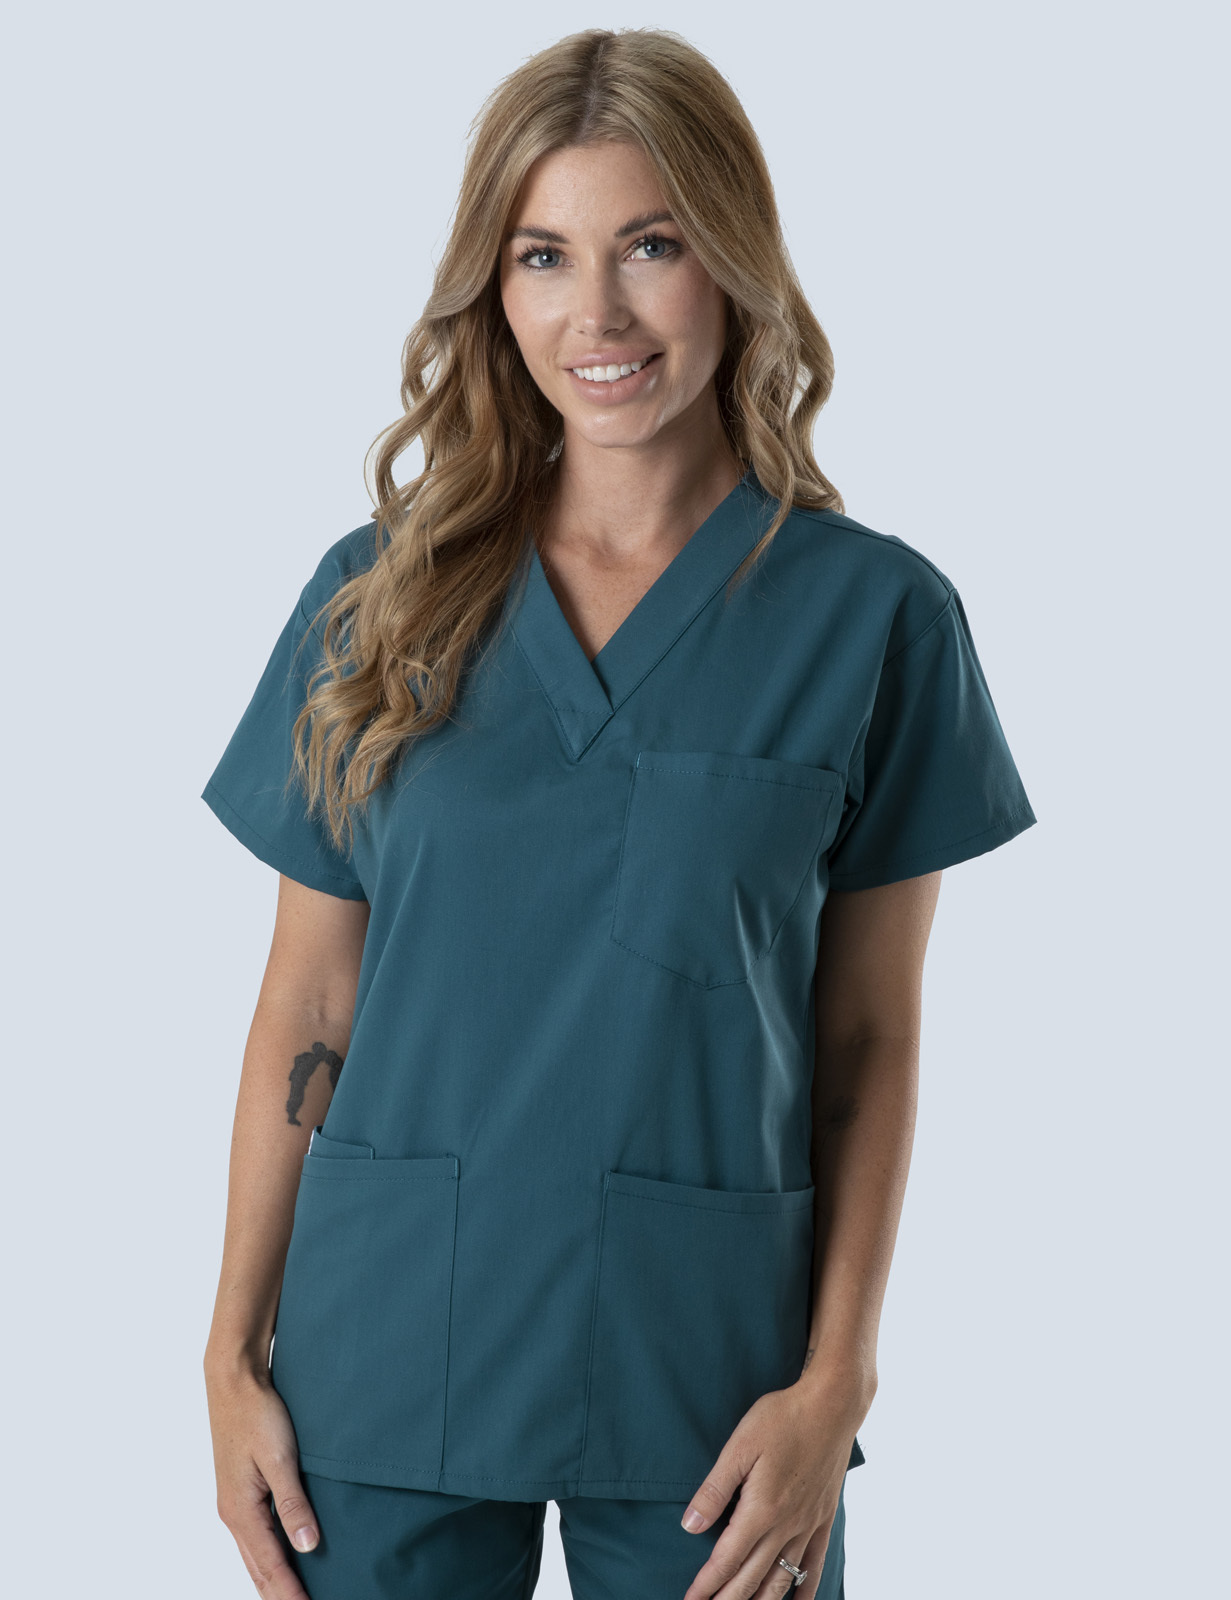 Biloela Hospital Healthcare Department Uniform Set Bundle (4 Pocket Top and Cargo pants in Caribbean incl Logos)